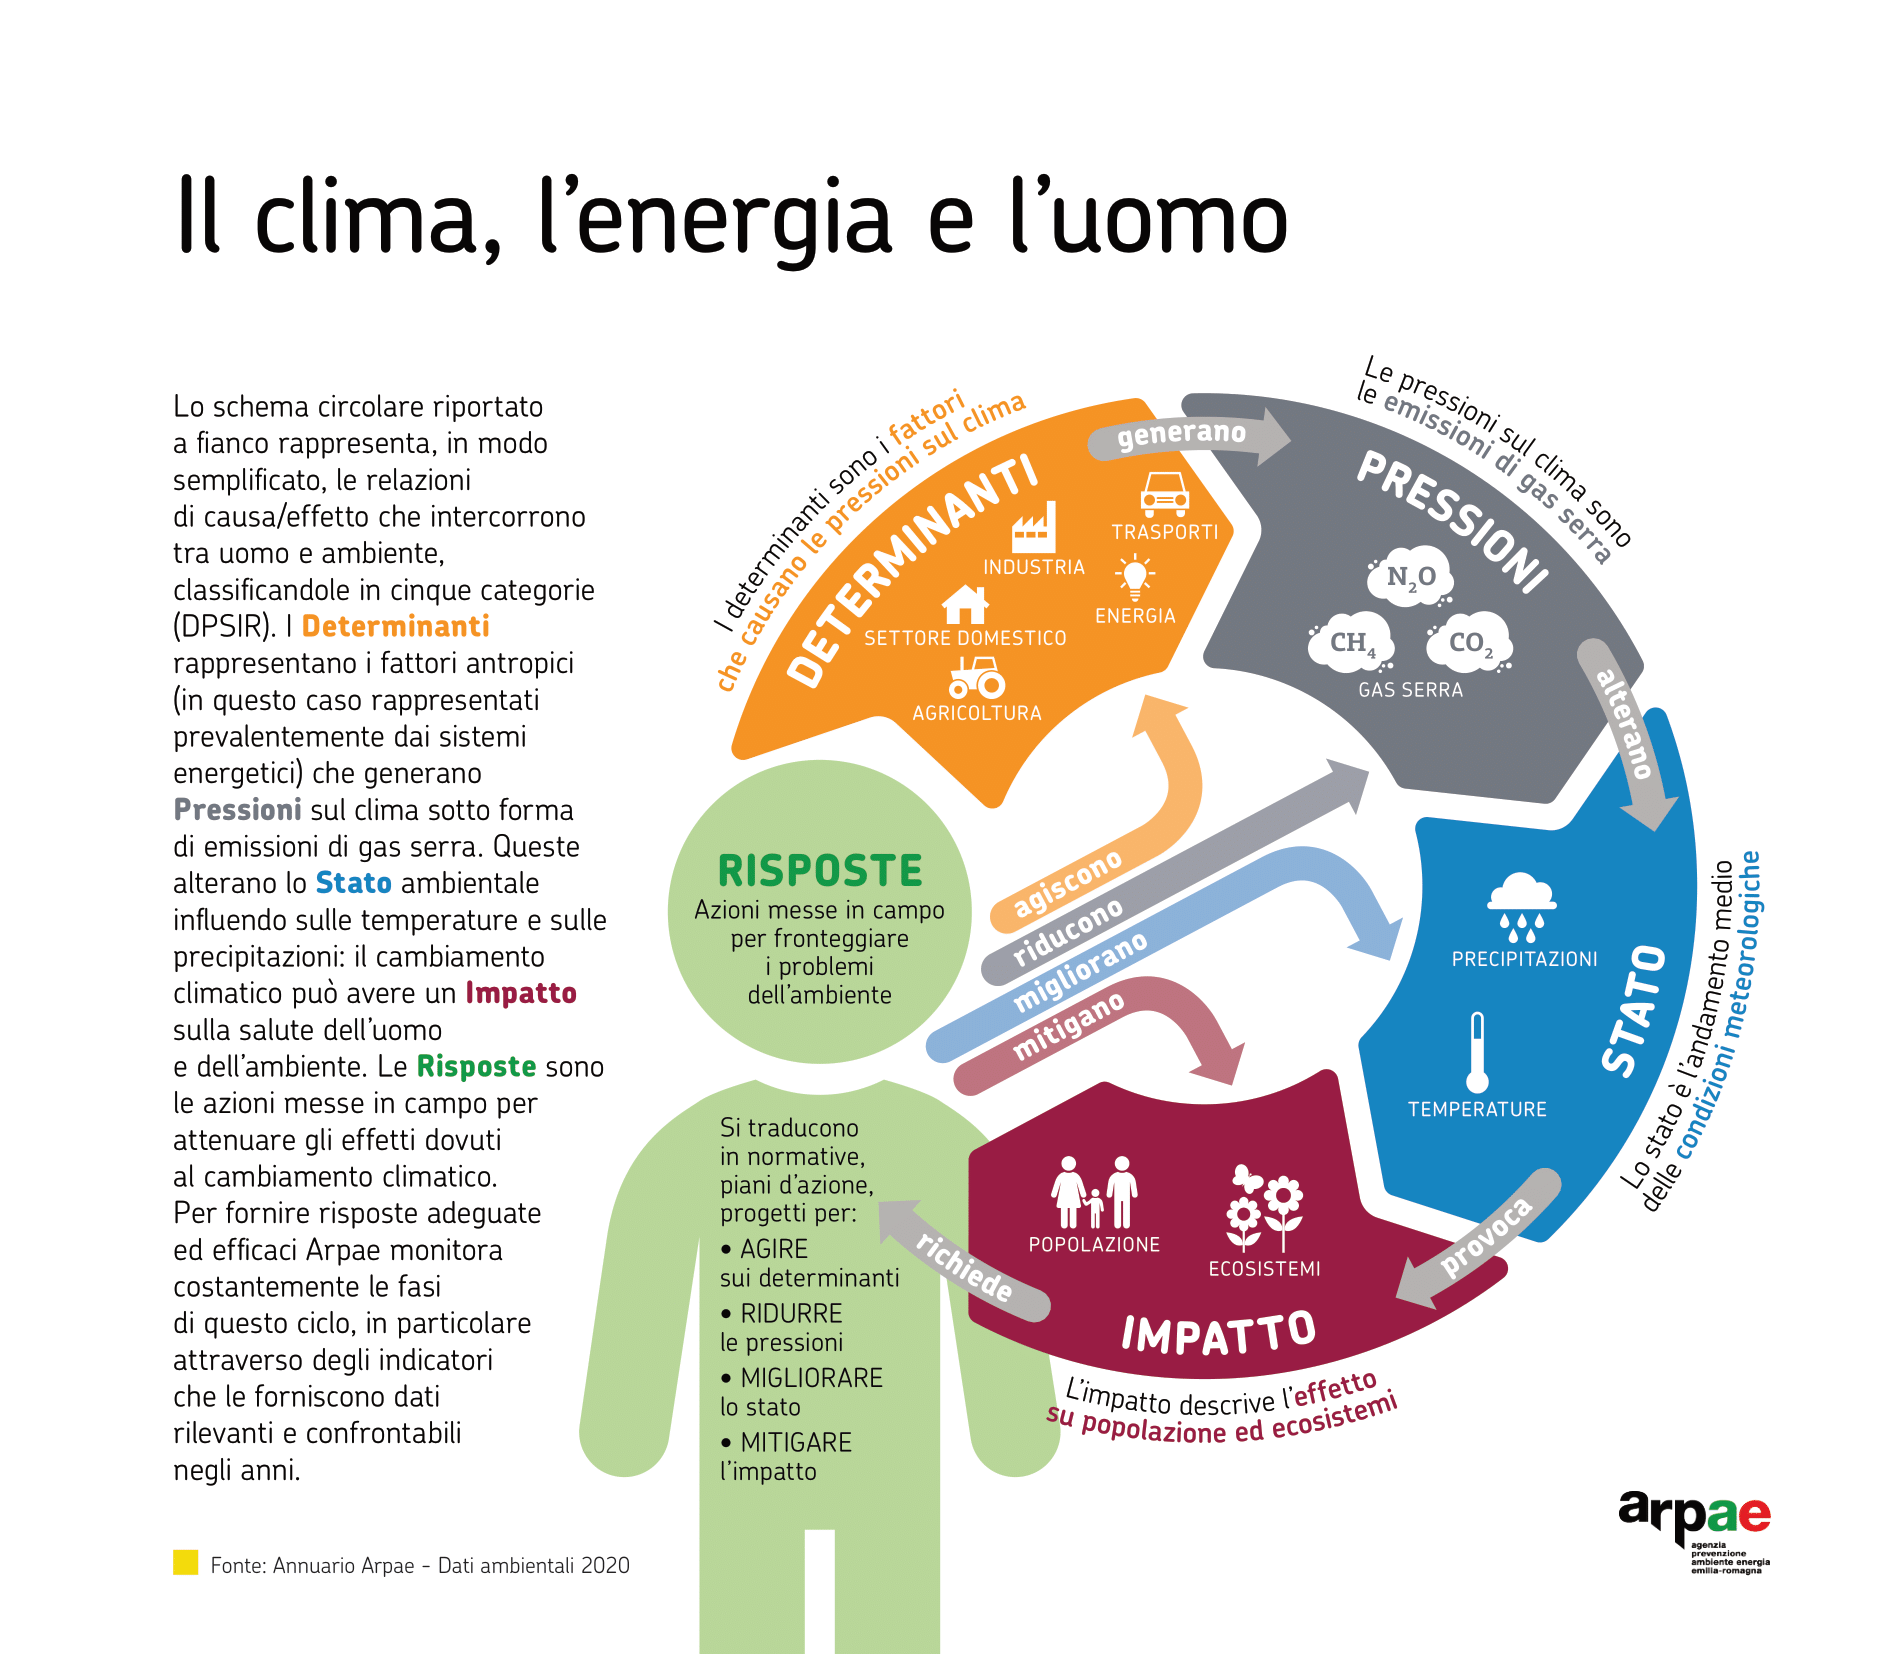 ARPAE 2020 DATI AMBIENTALI - Clima, Energia e Uomo-1.png